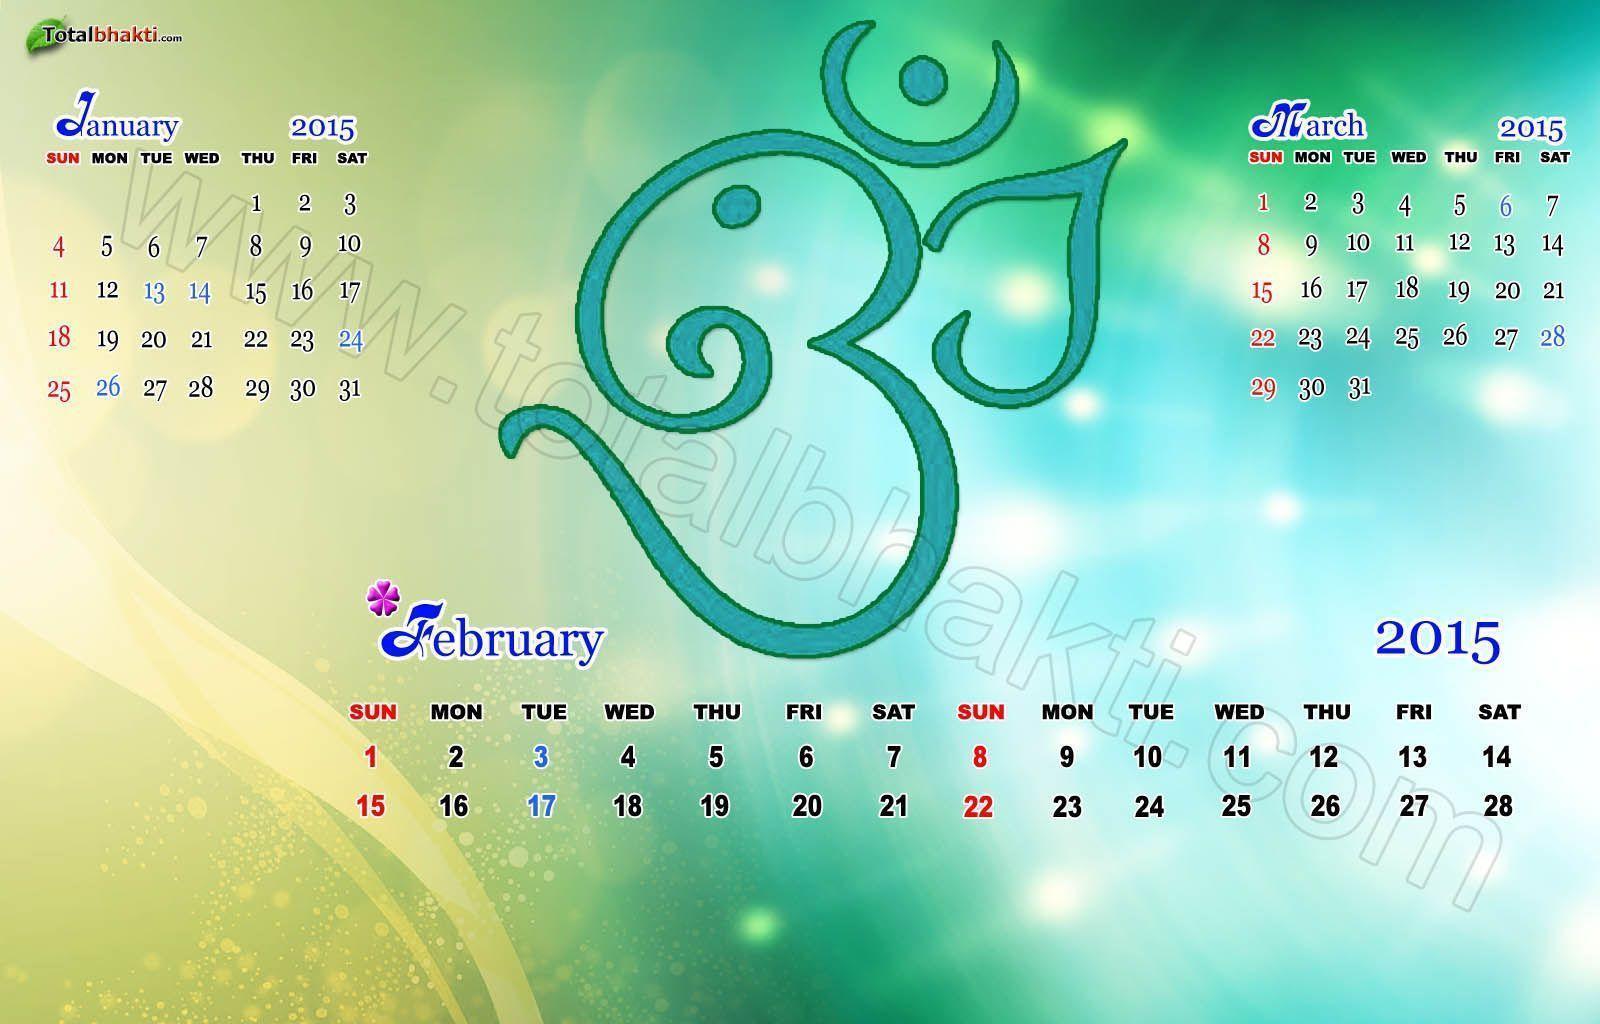 Hindu Calender Wallpaper, Hindu Wallpaper, Om February 2015